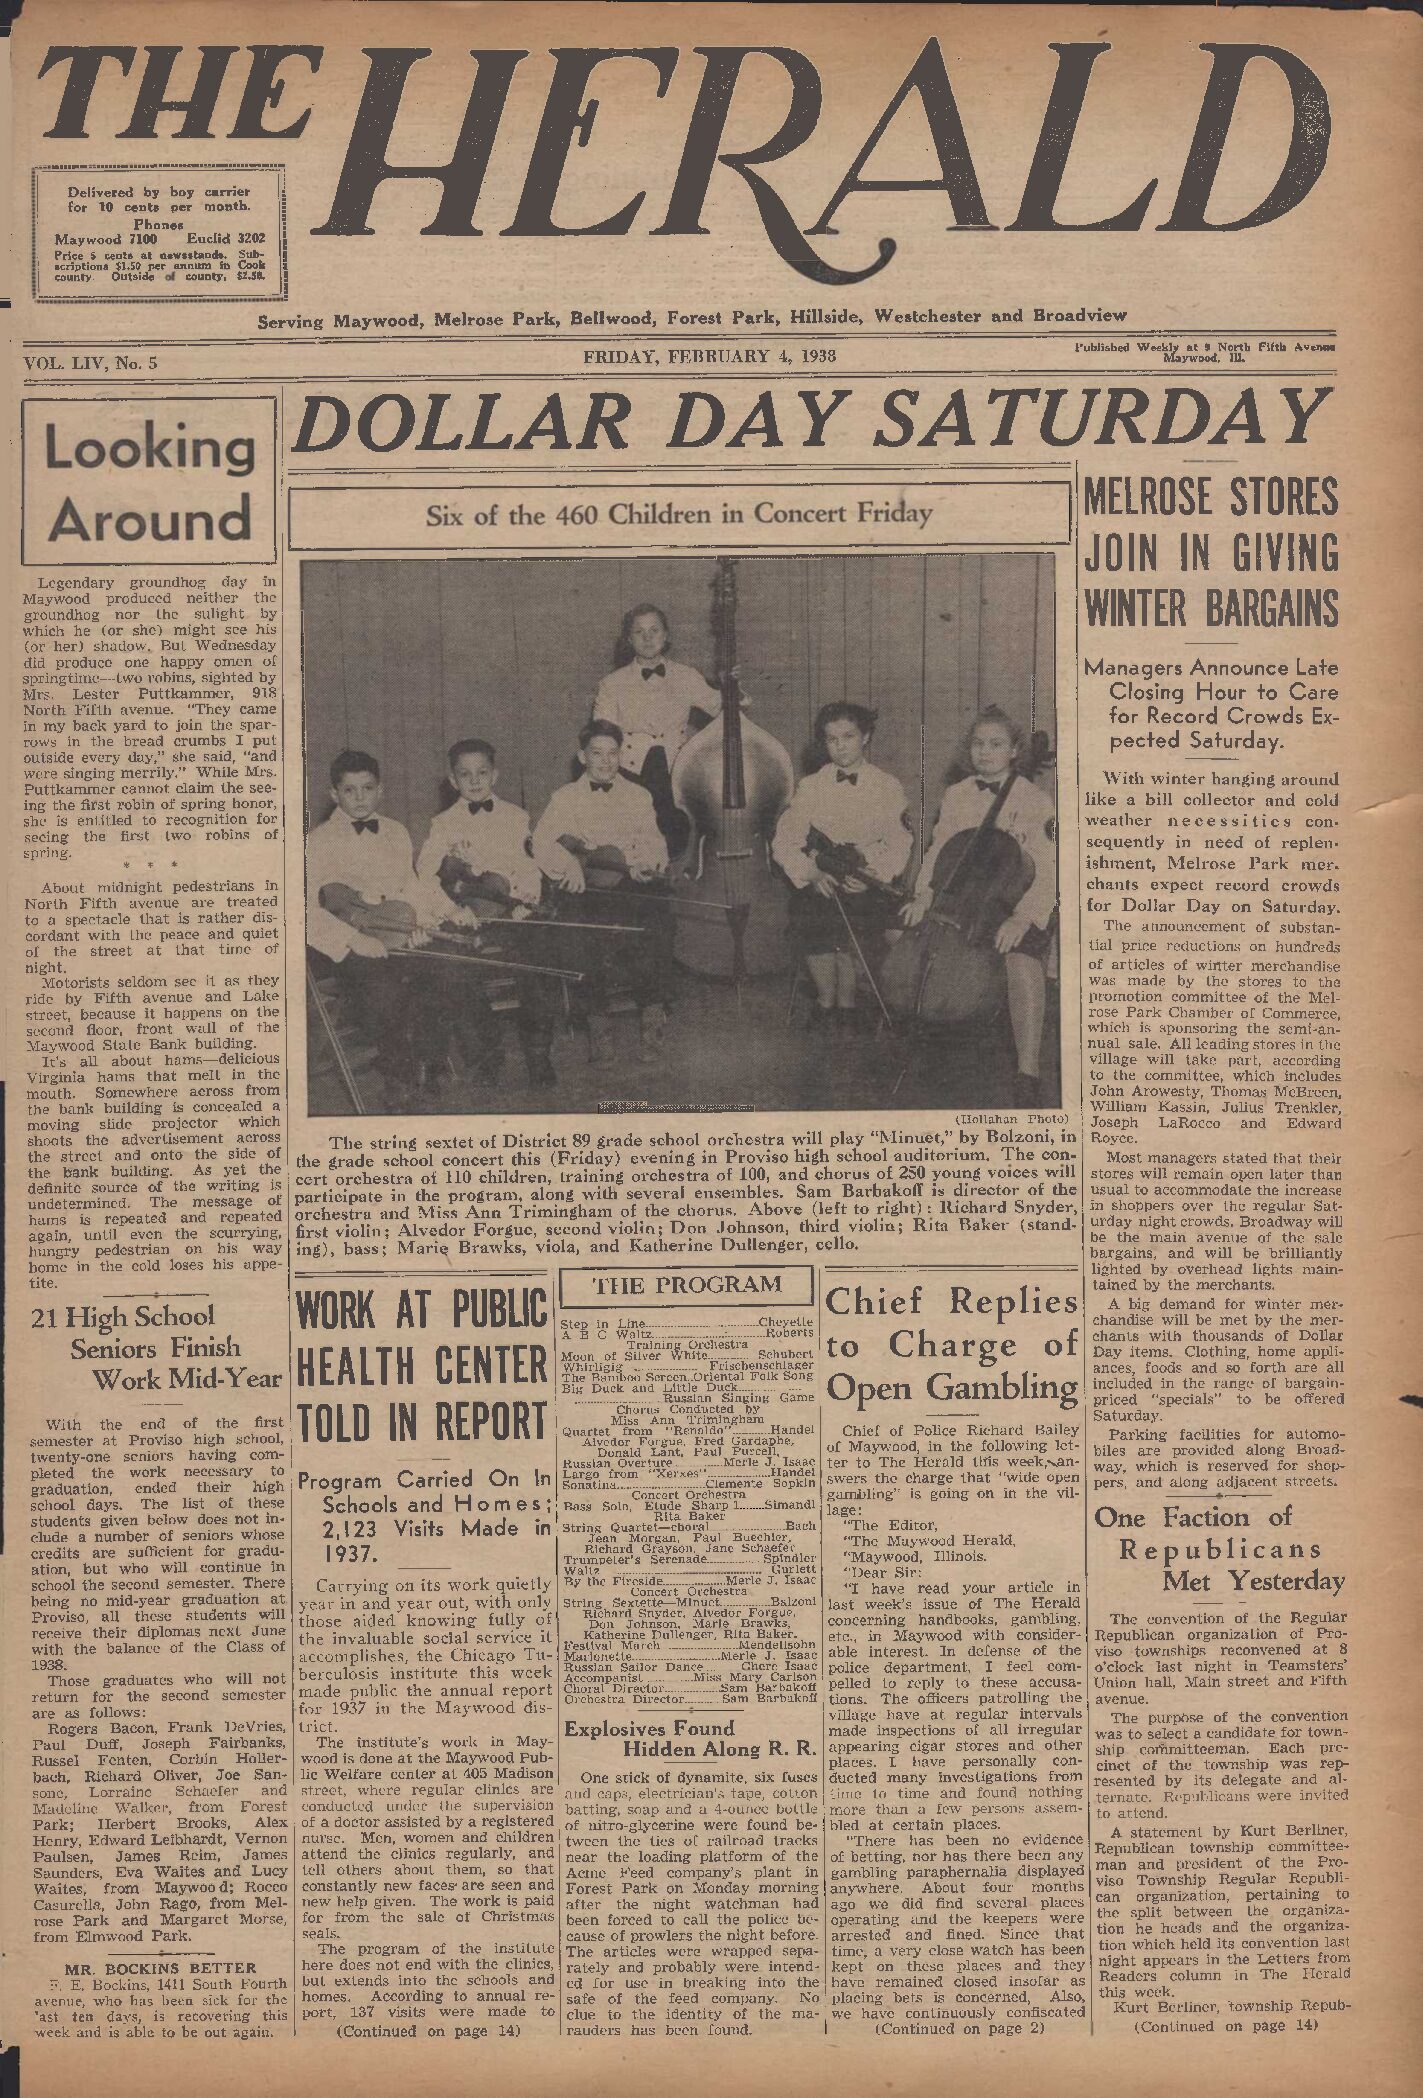 The Herald – 19380204